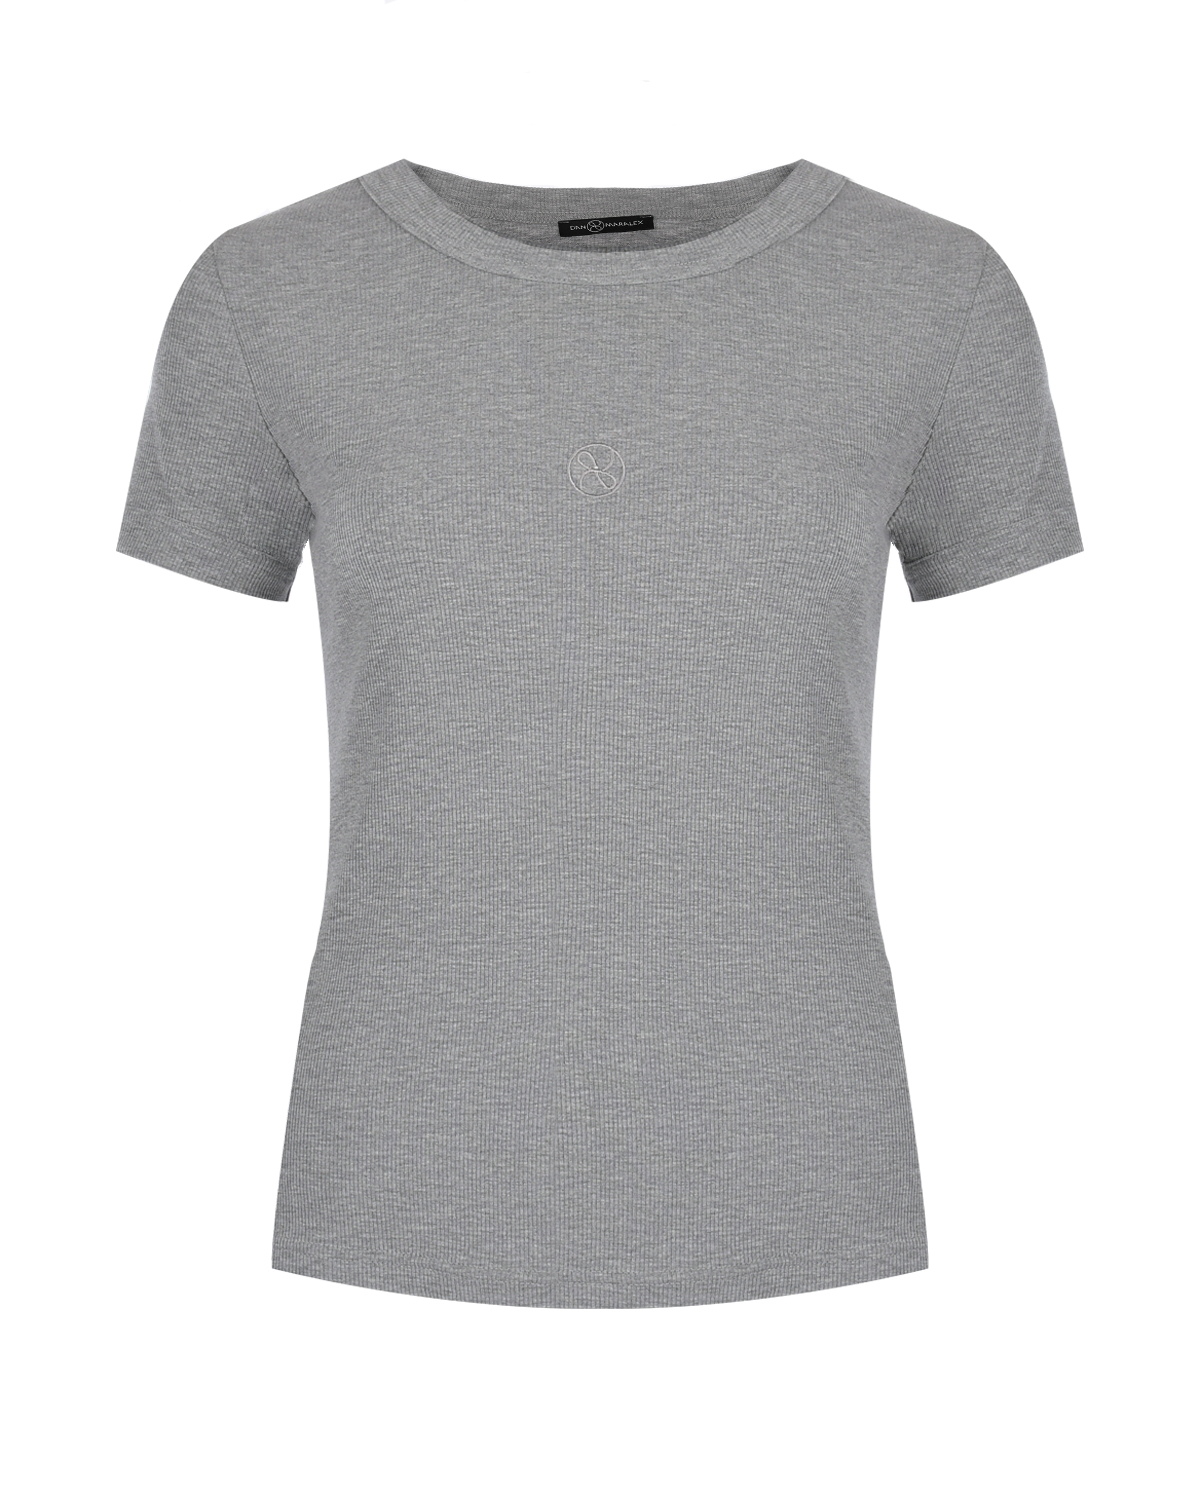 Базовая приталенная футболка Dan Maralex, размер 46, цвет серый - фото 1